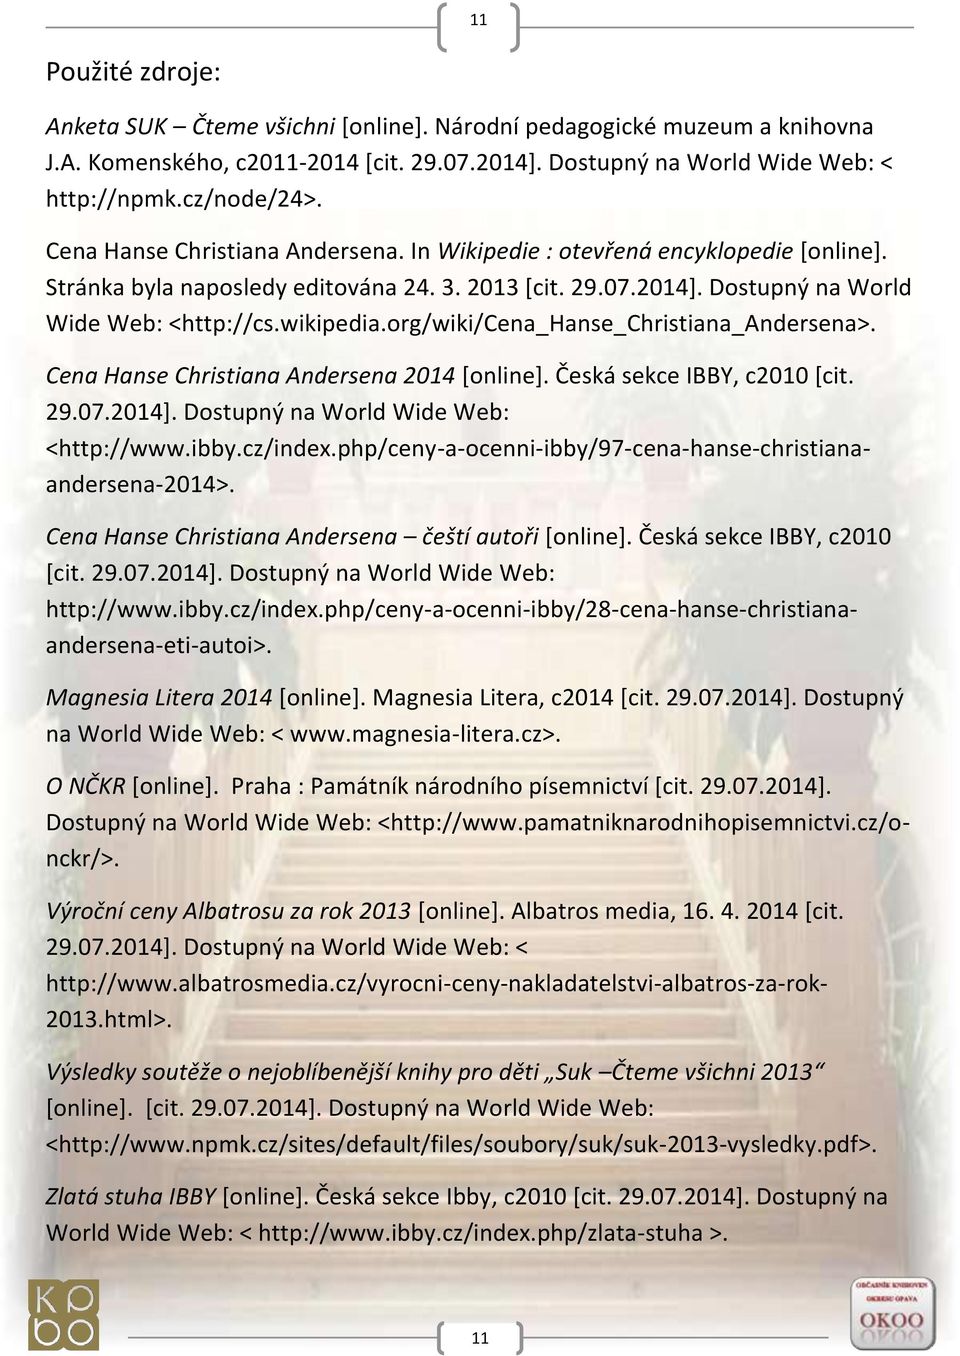 org/wiki/cena_hanse_christiana_andersena>. Cena Hanse Christiana Andersena 2014 [online]. Česká sekce IBBY, c2010 [cit. 29.07.2014]. Dostupný na World Wide Web: <http://www.ibby.cz/index.